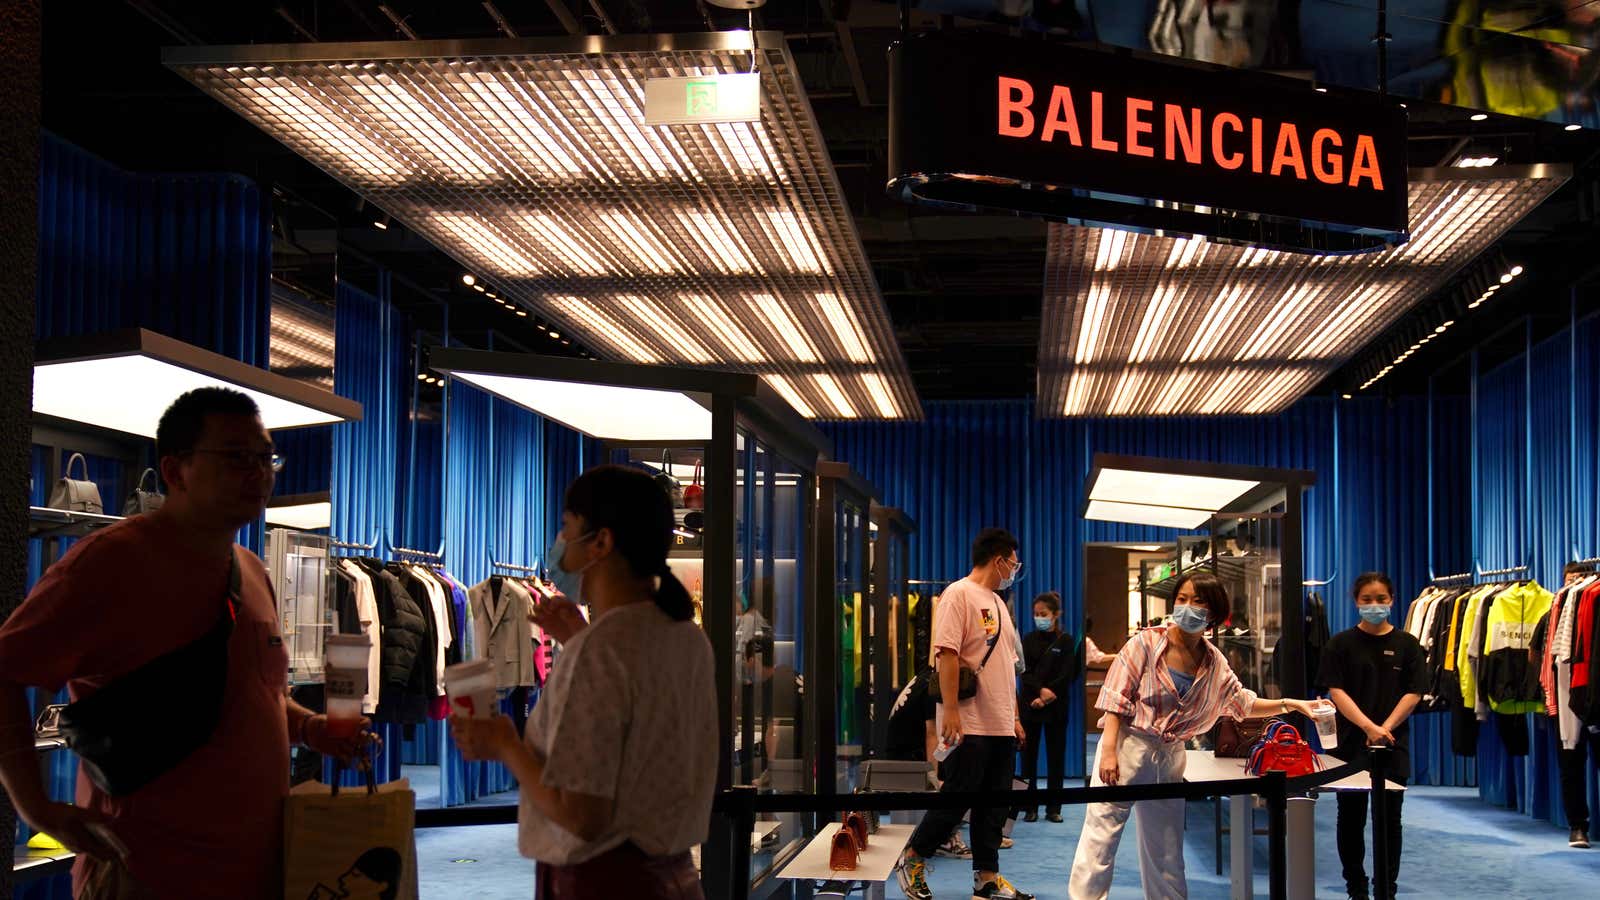 Balenciaga has teamed with Crocs on a high-heeled clog.